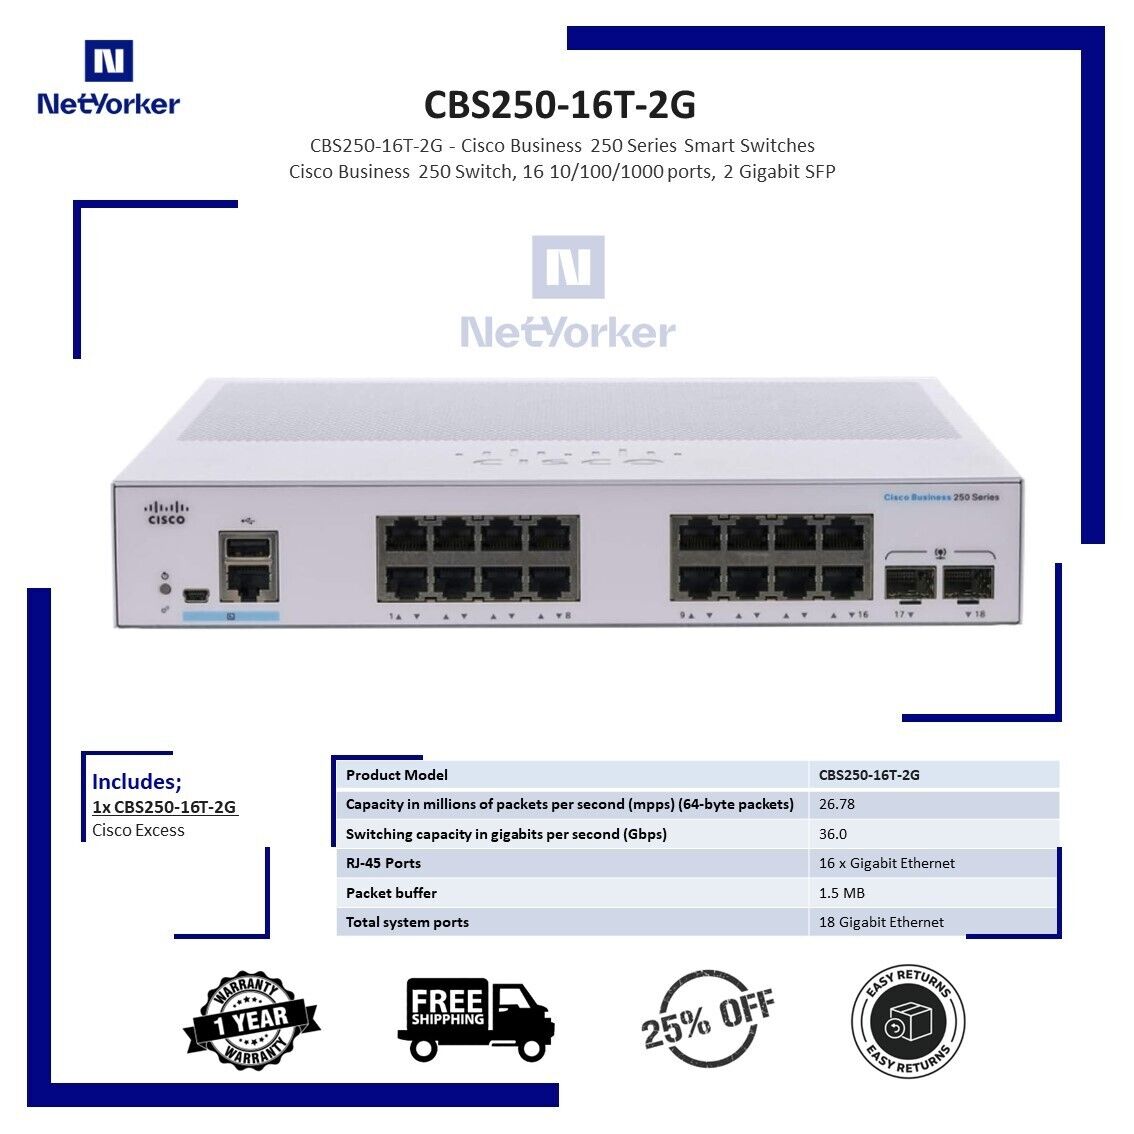 Cisco Business 250 Series CBS250-16T-2G 16 Port PoE Gigabit Ethernet Switch